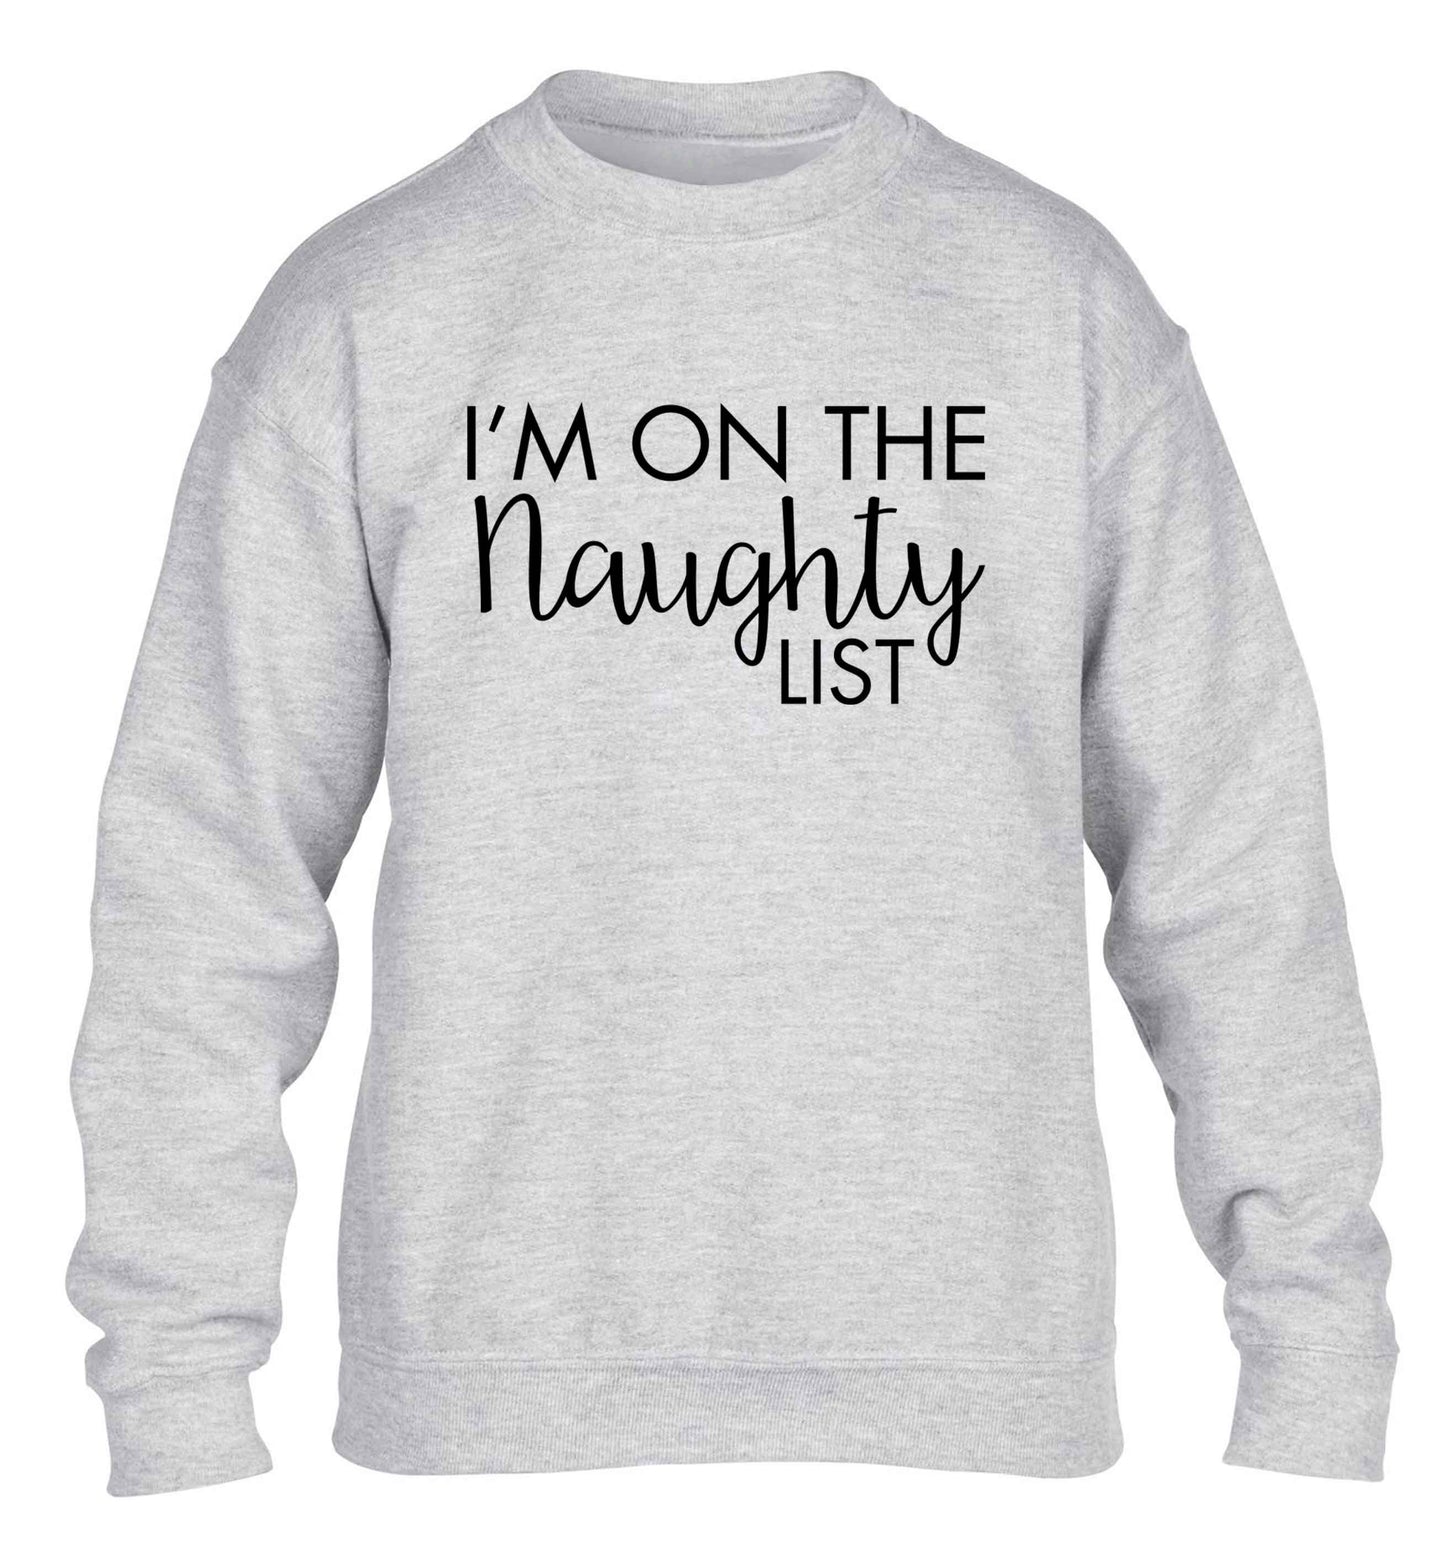 I'm on the naughty list children's grey sweater 12-13 Years